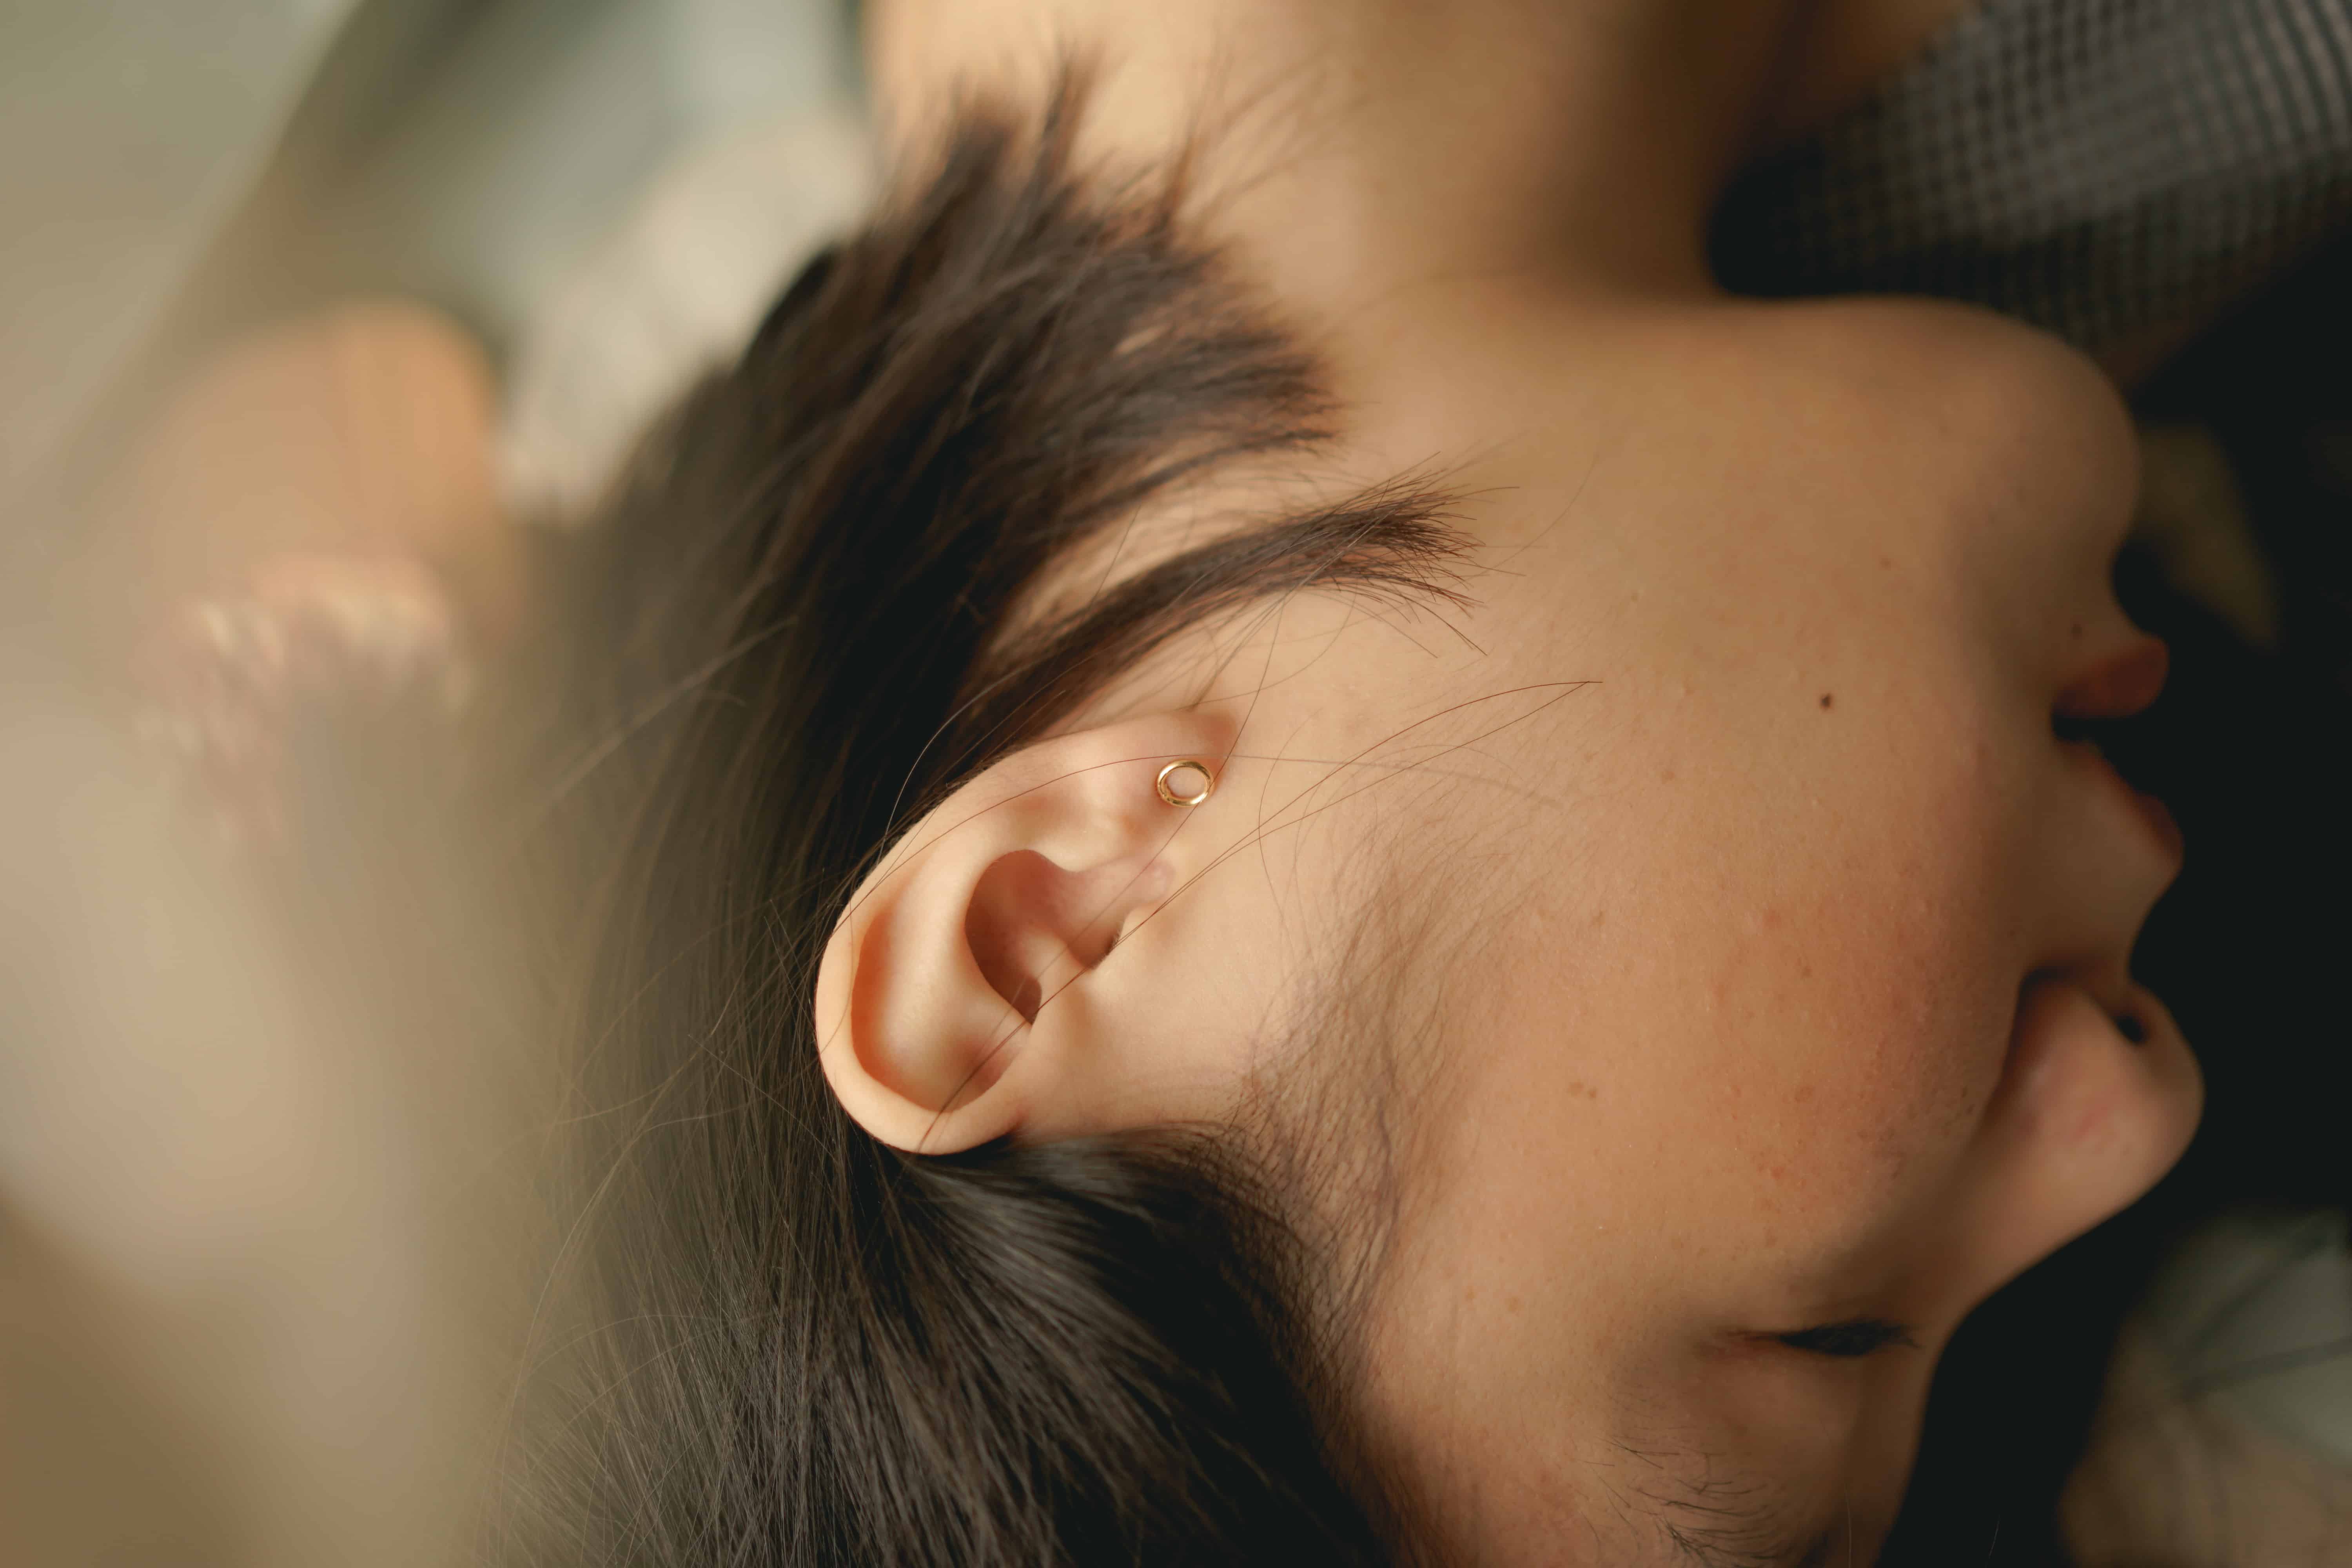 A sleeping woman's ear